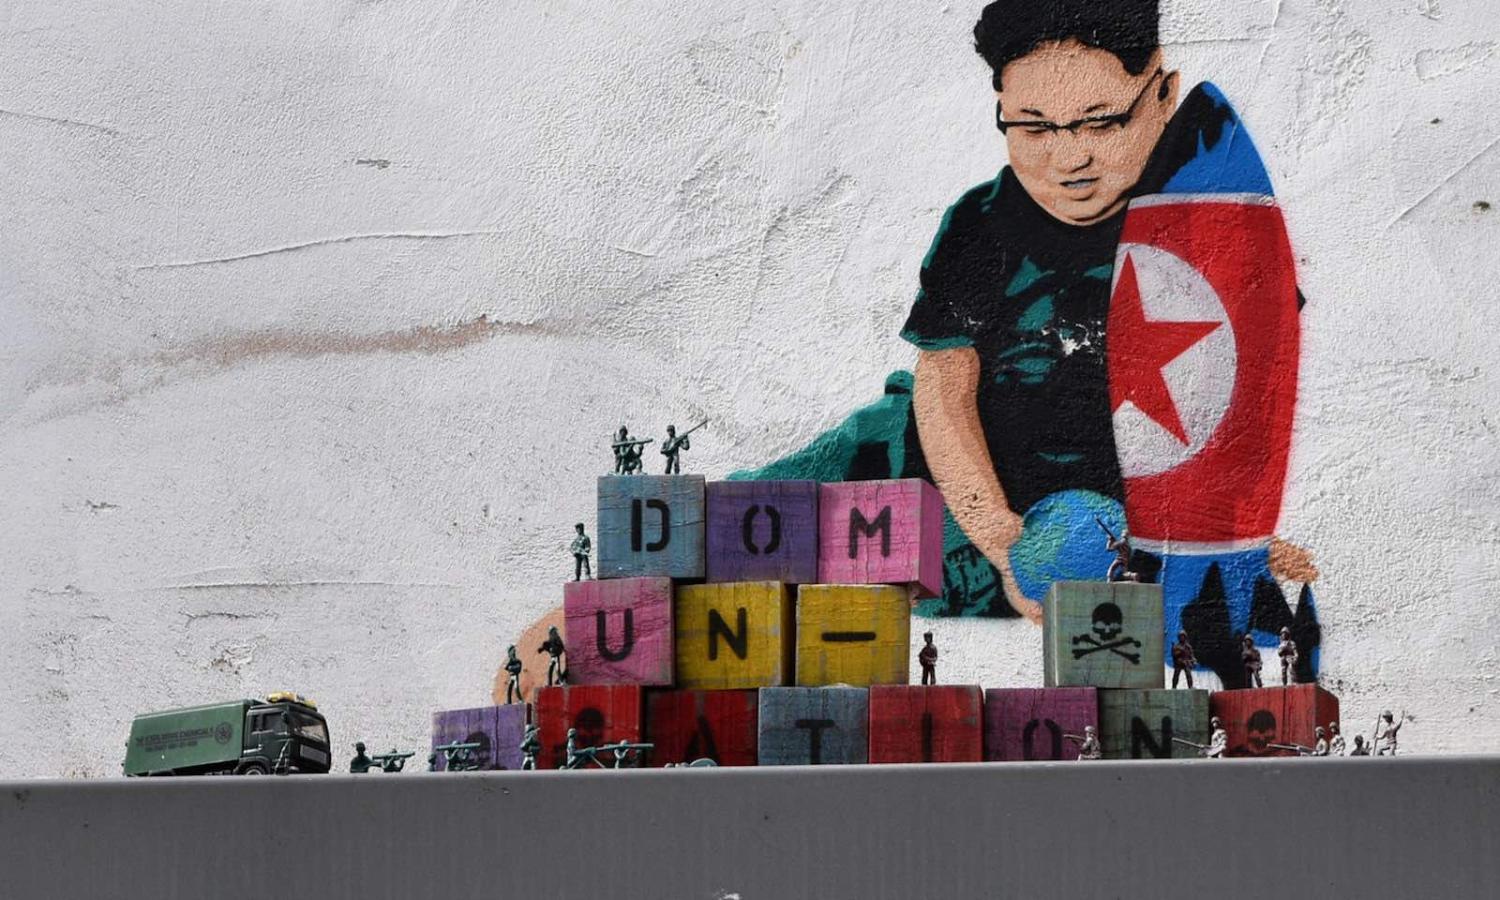 Kim Jong-un and toys ... street art in London (Photo: Loco Steve/Flickr)